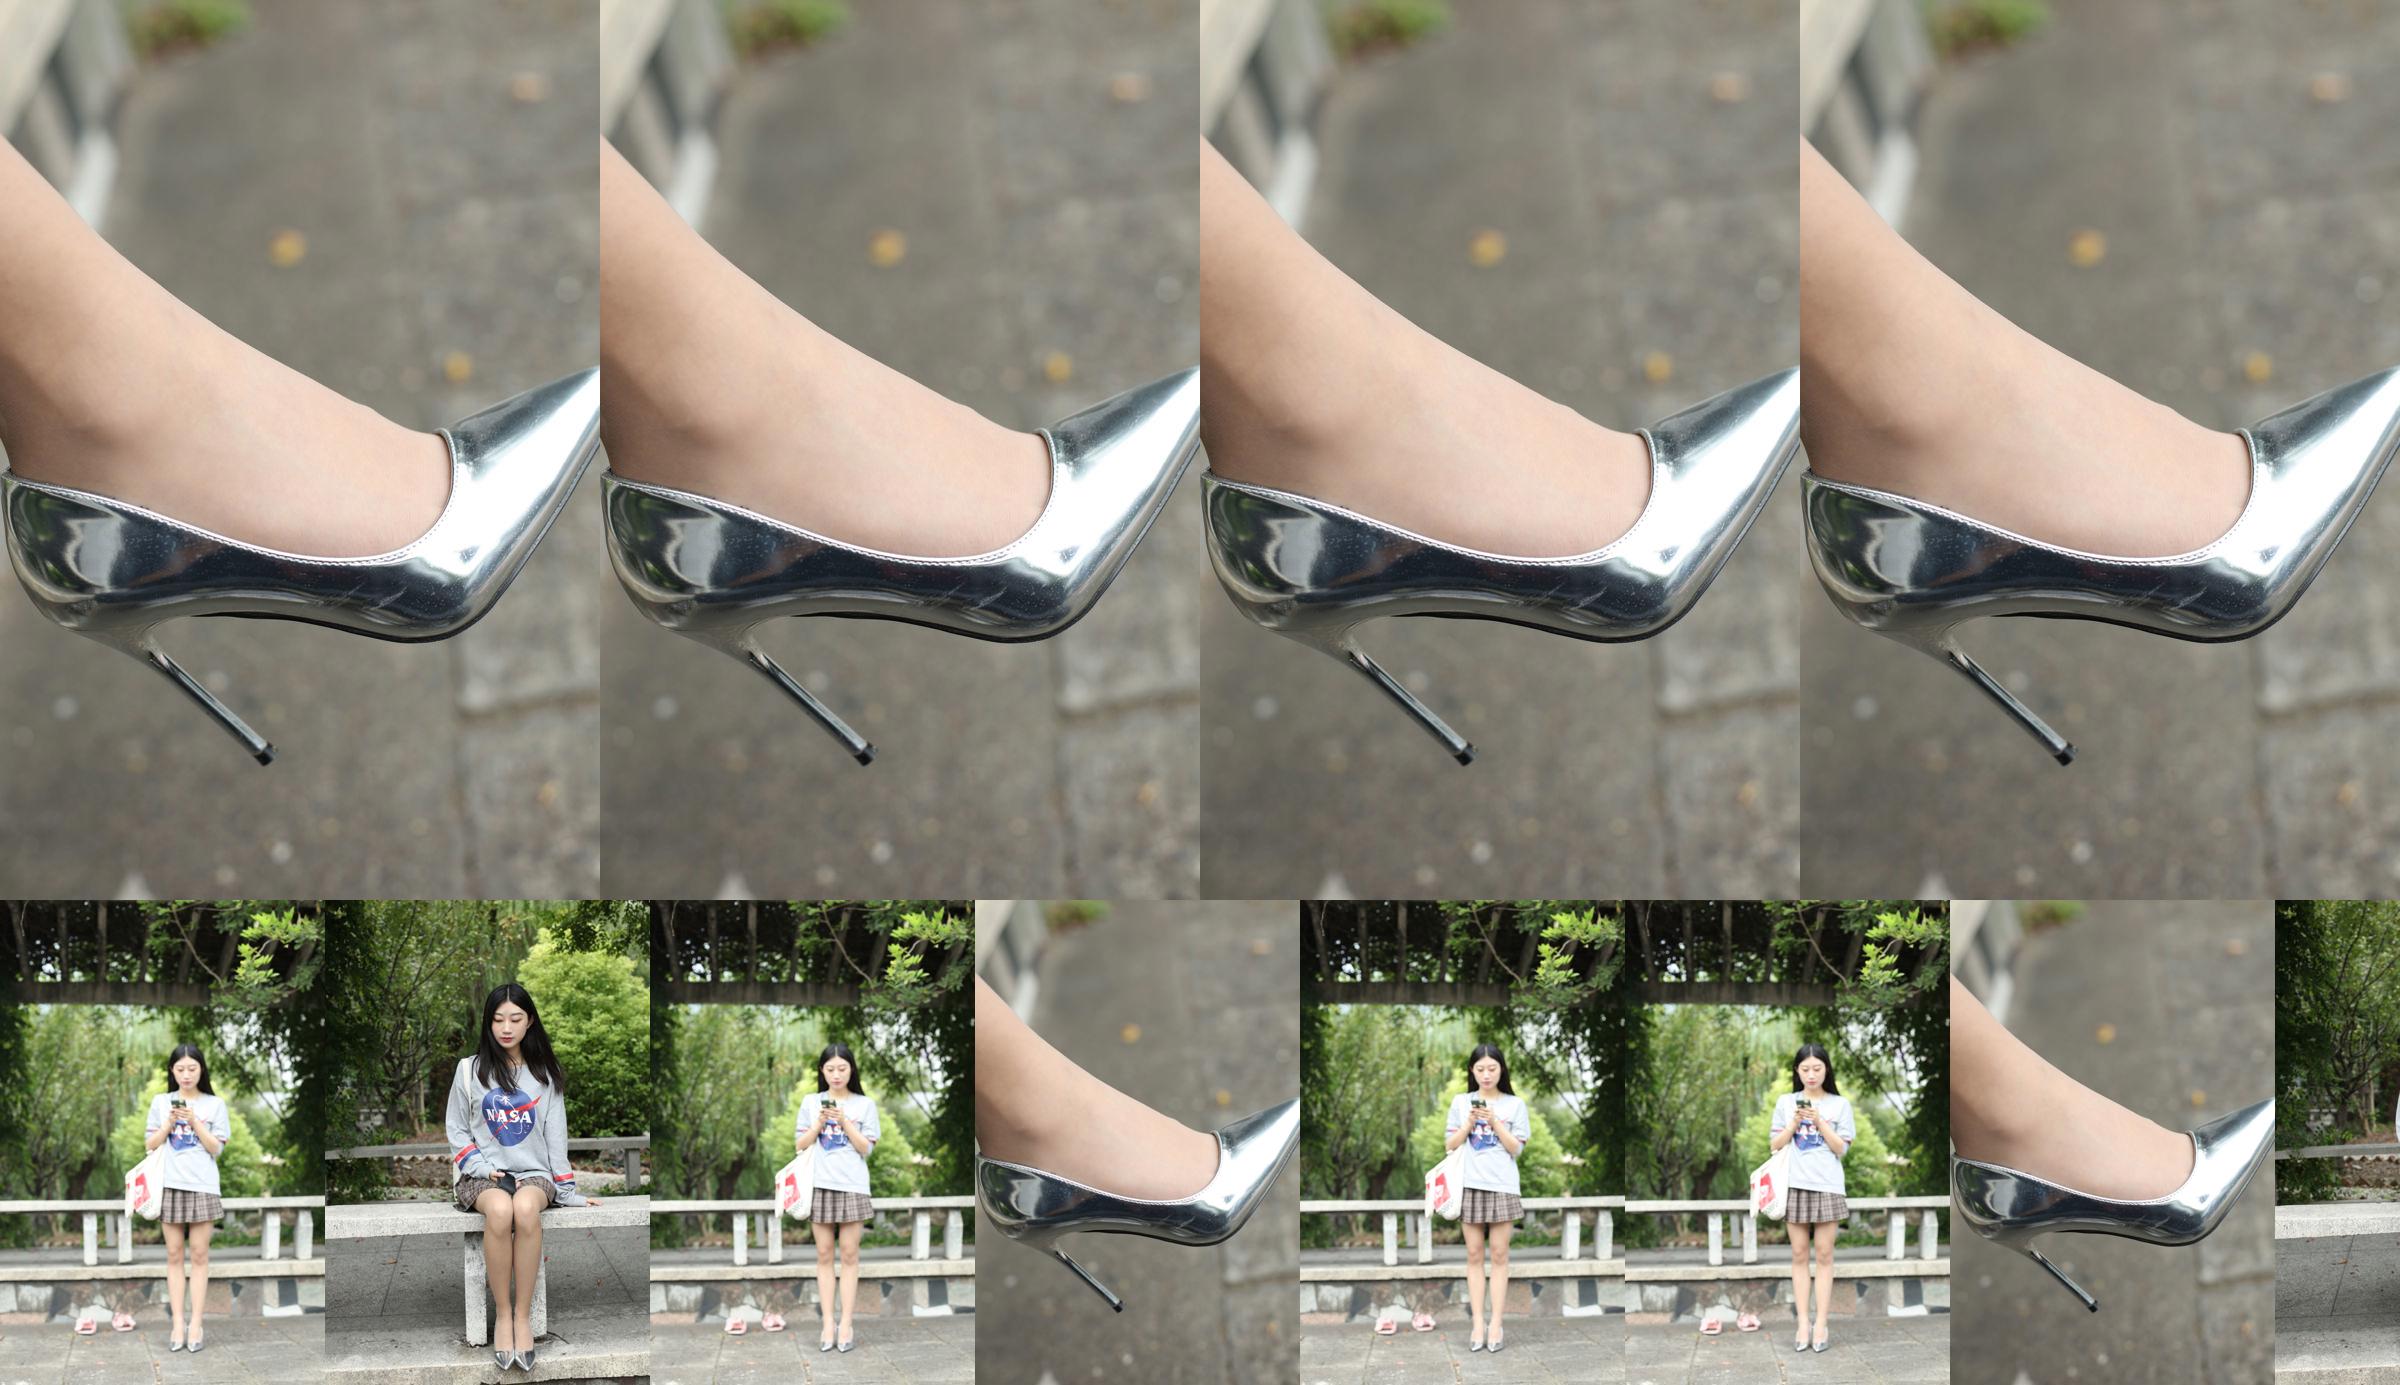 [Naisi] NO.147 Yi Ning, the soft girl on the long-legged stone bench No.8ea802 Page 3